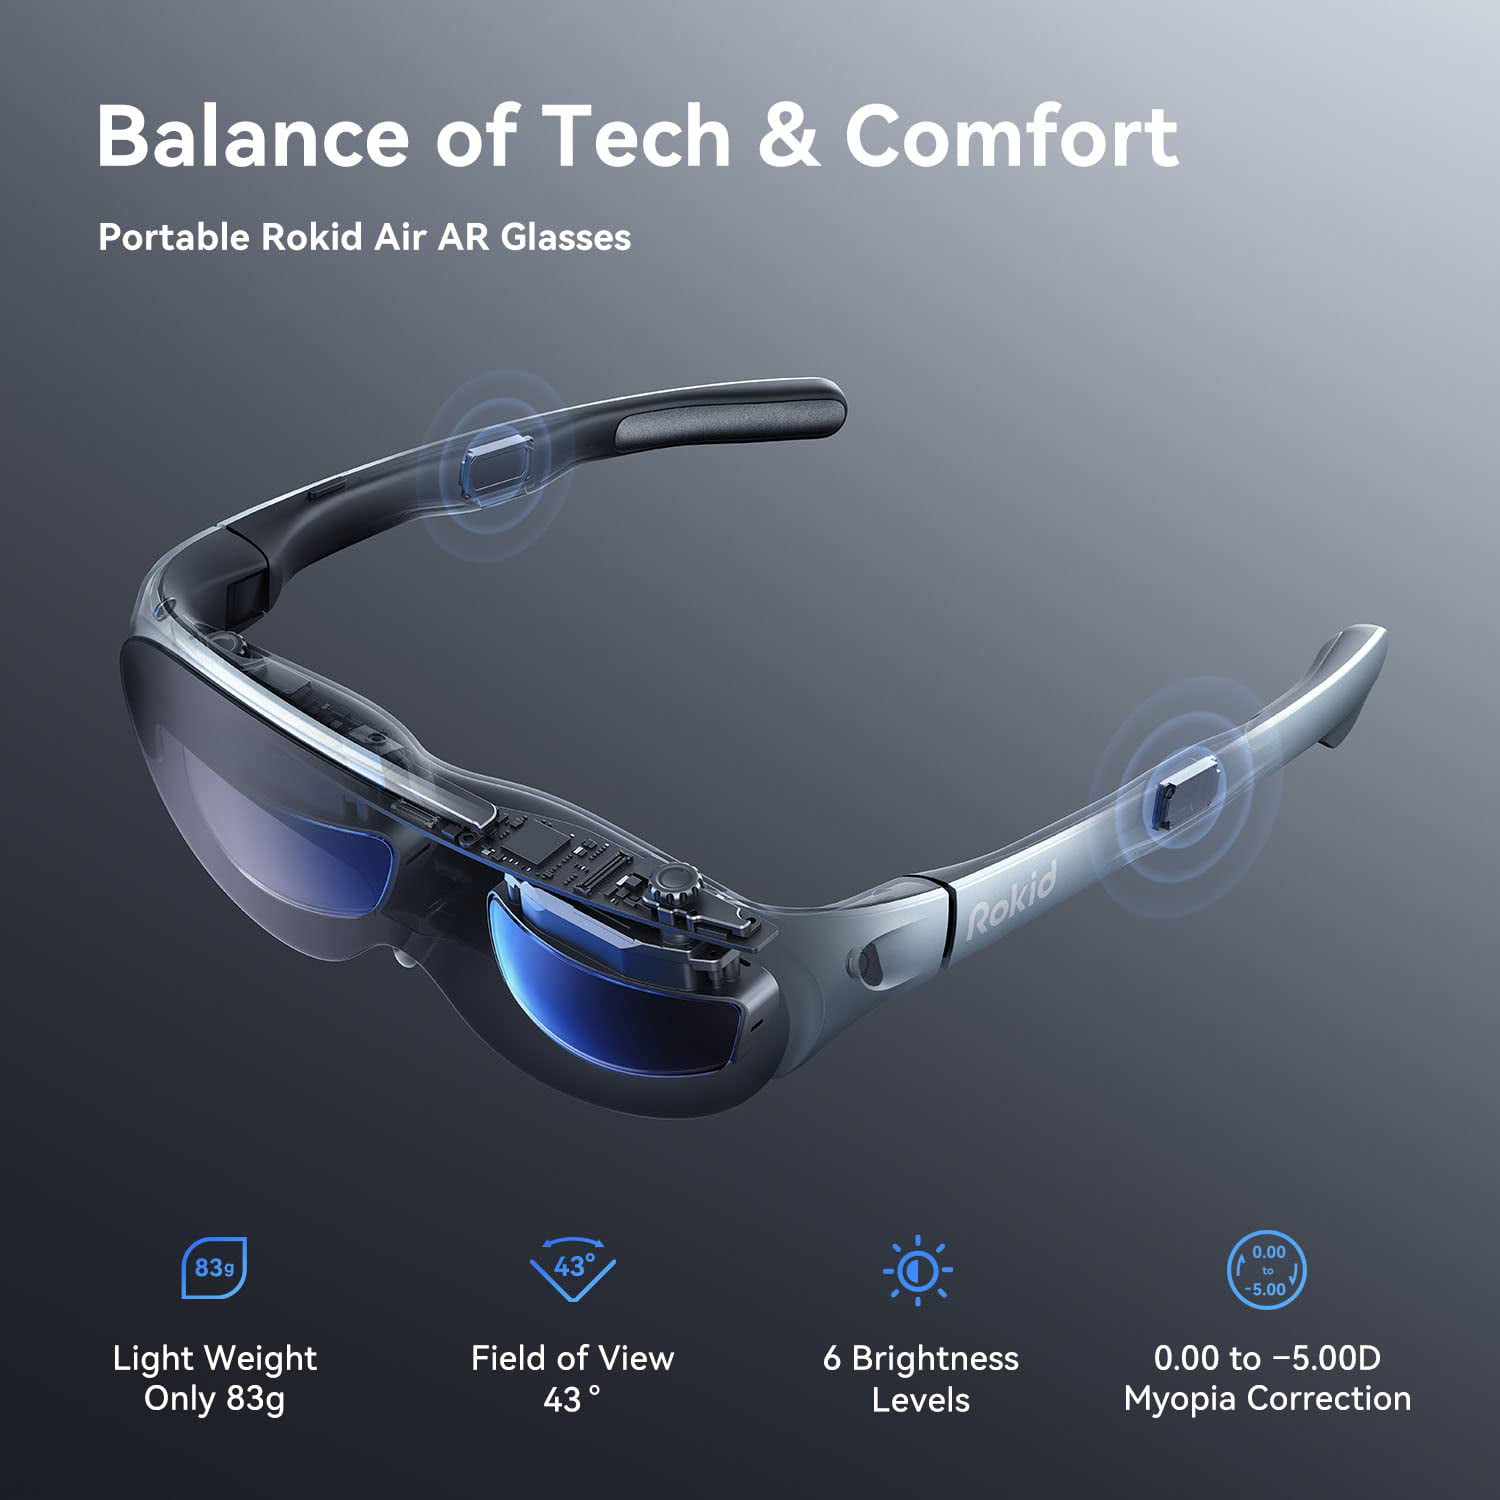 Rokid Air AR Glasses, Myopia Friendly Pocket-Sized Yet Massive